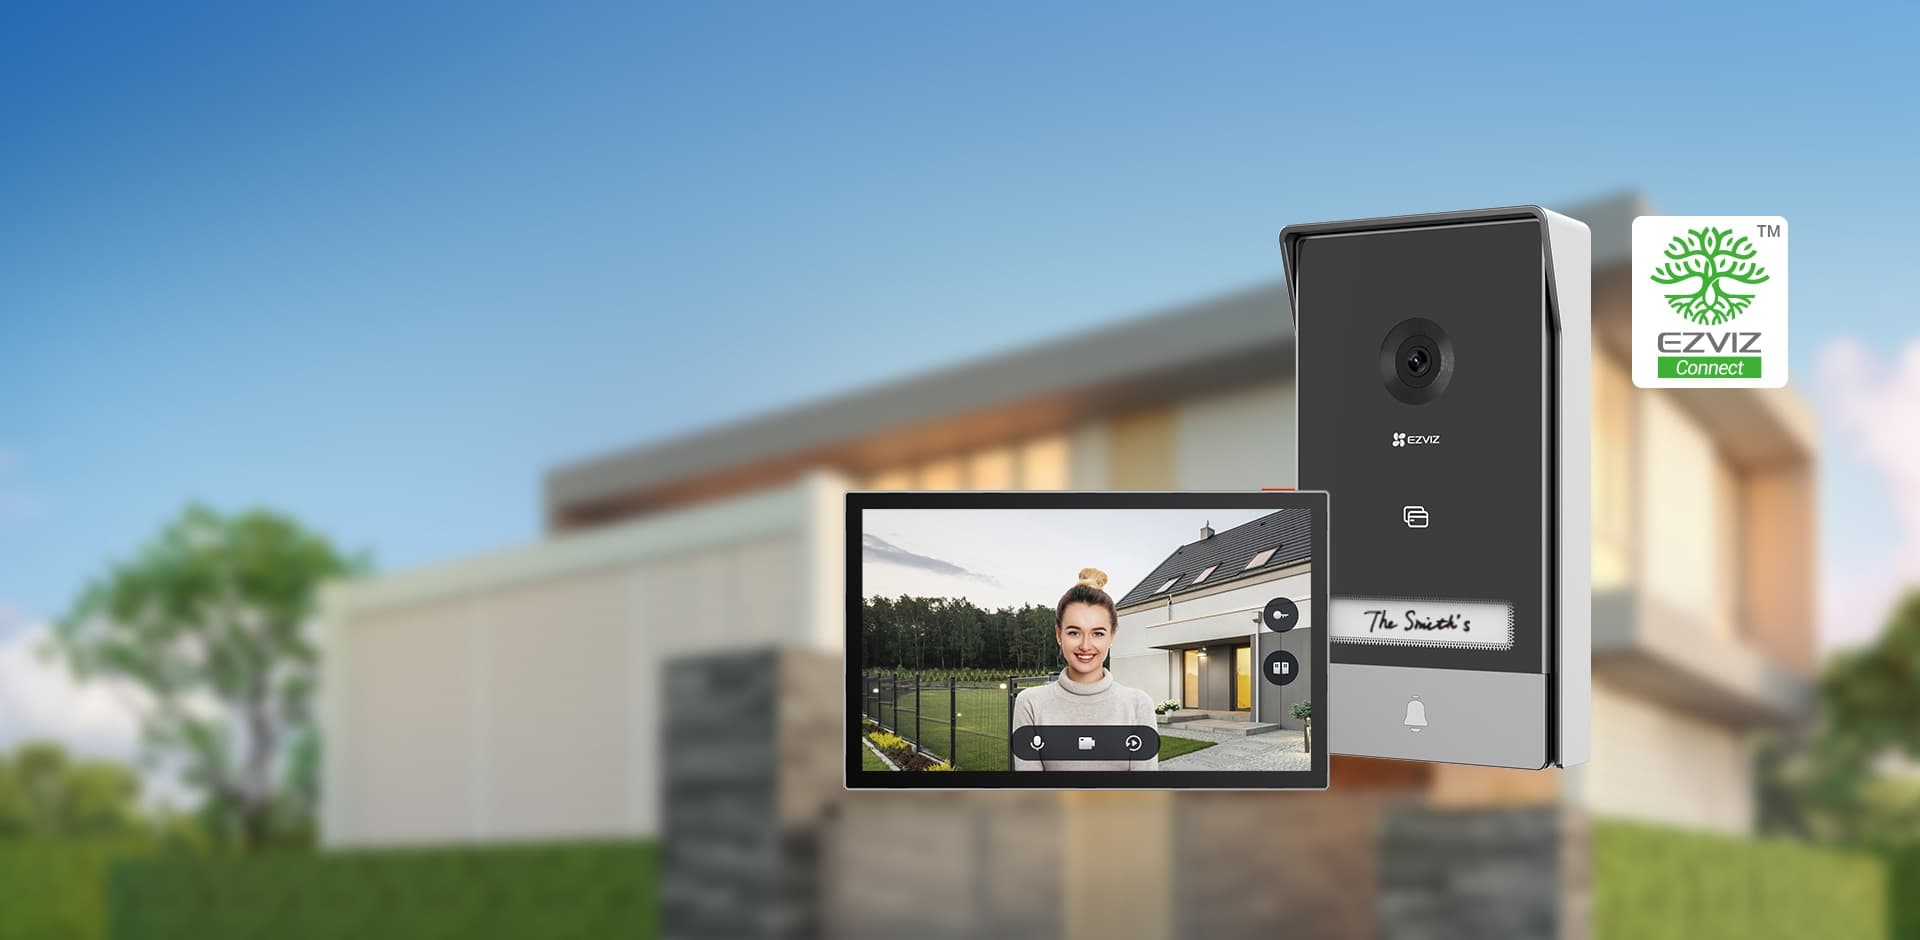 EZVIZ HP7 2K Smart Home Video Doorphone